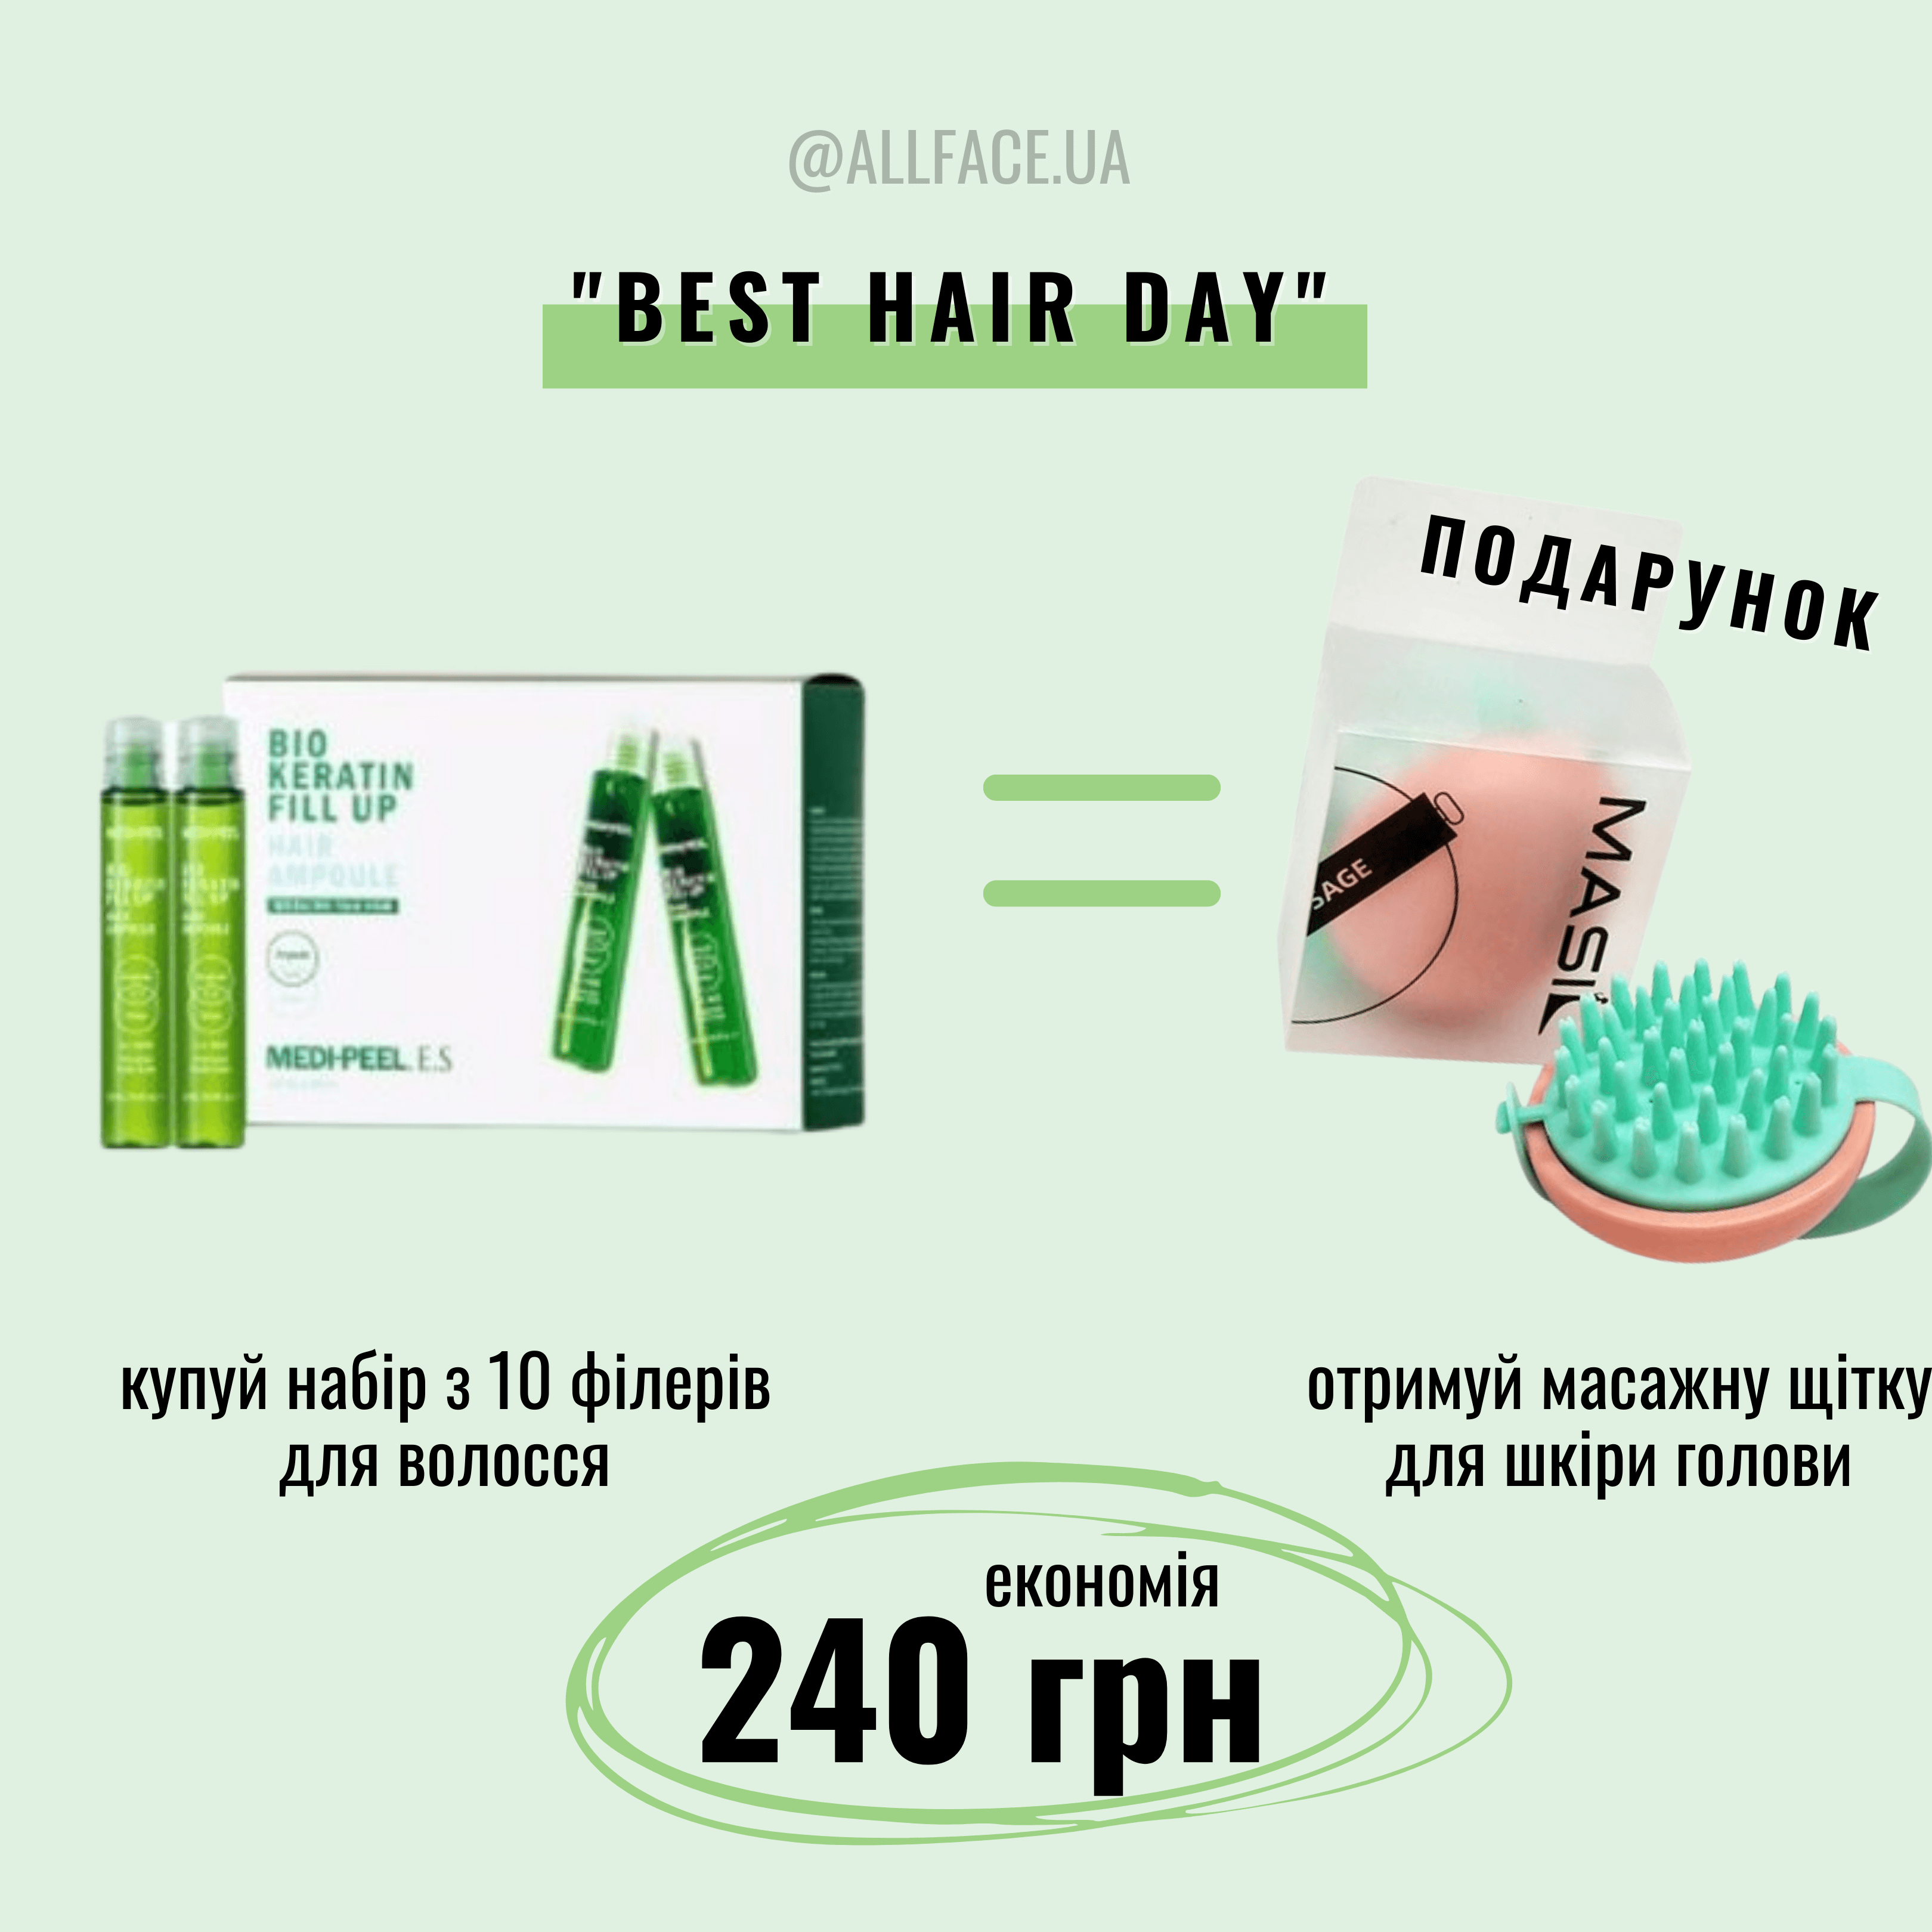 Сет “Best Hair Day” філери для волосся Medi-Peel і масажна щітка Masil